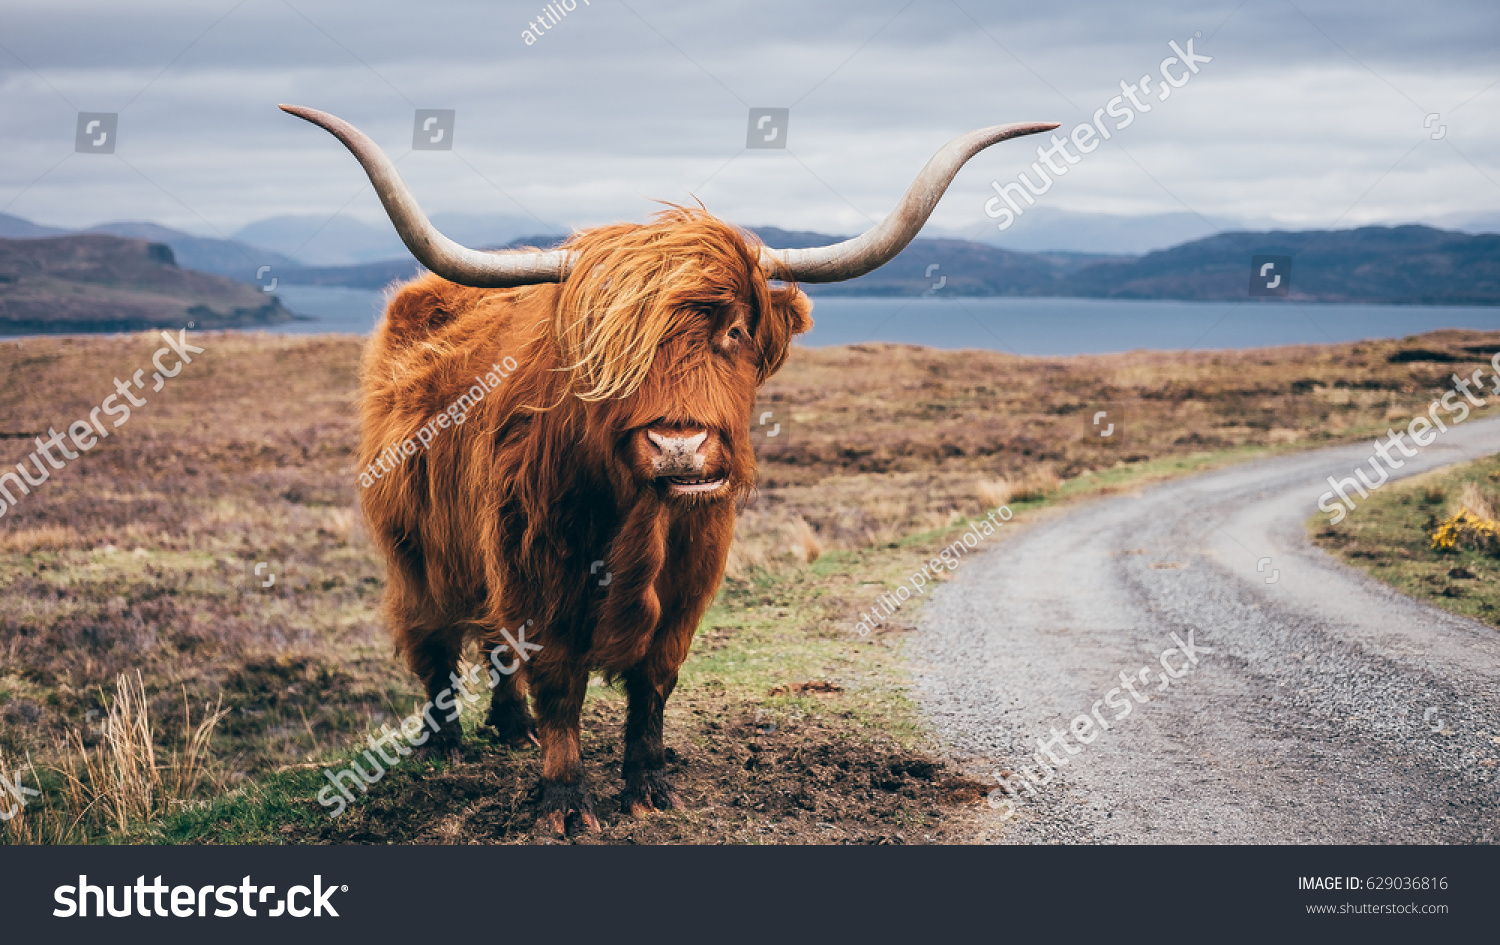 Hairy Scottish Yak on the road, Isle of Skye #629036816